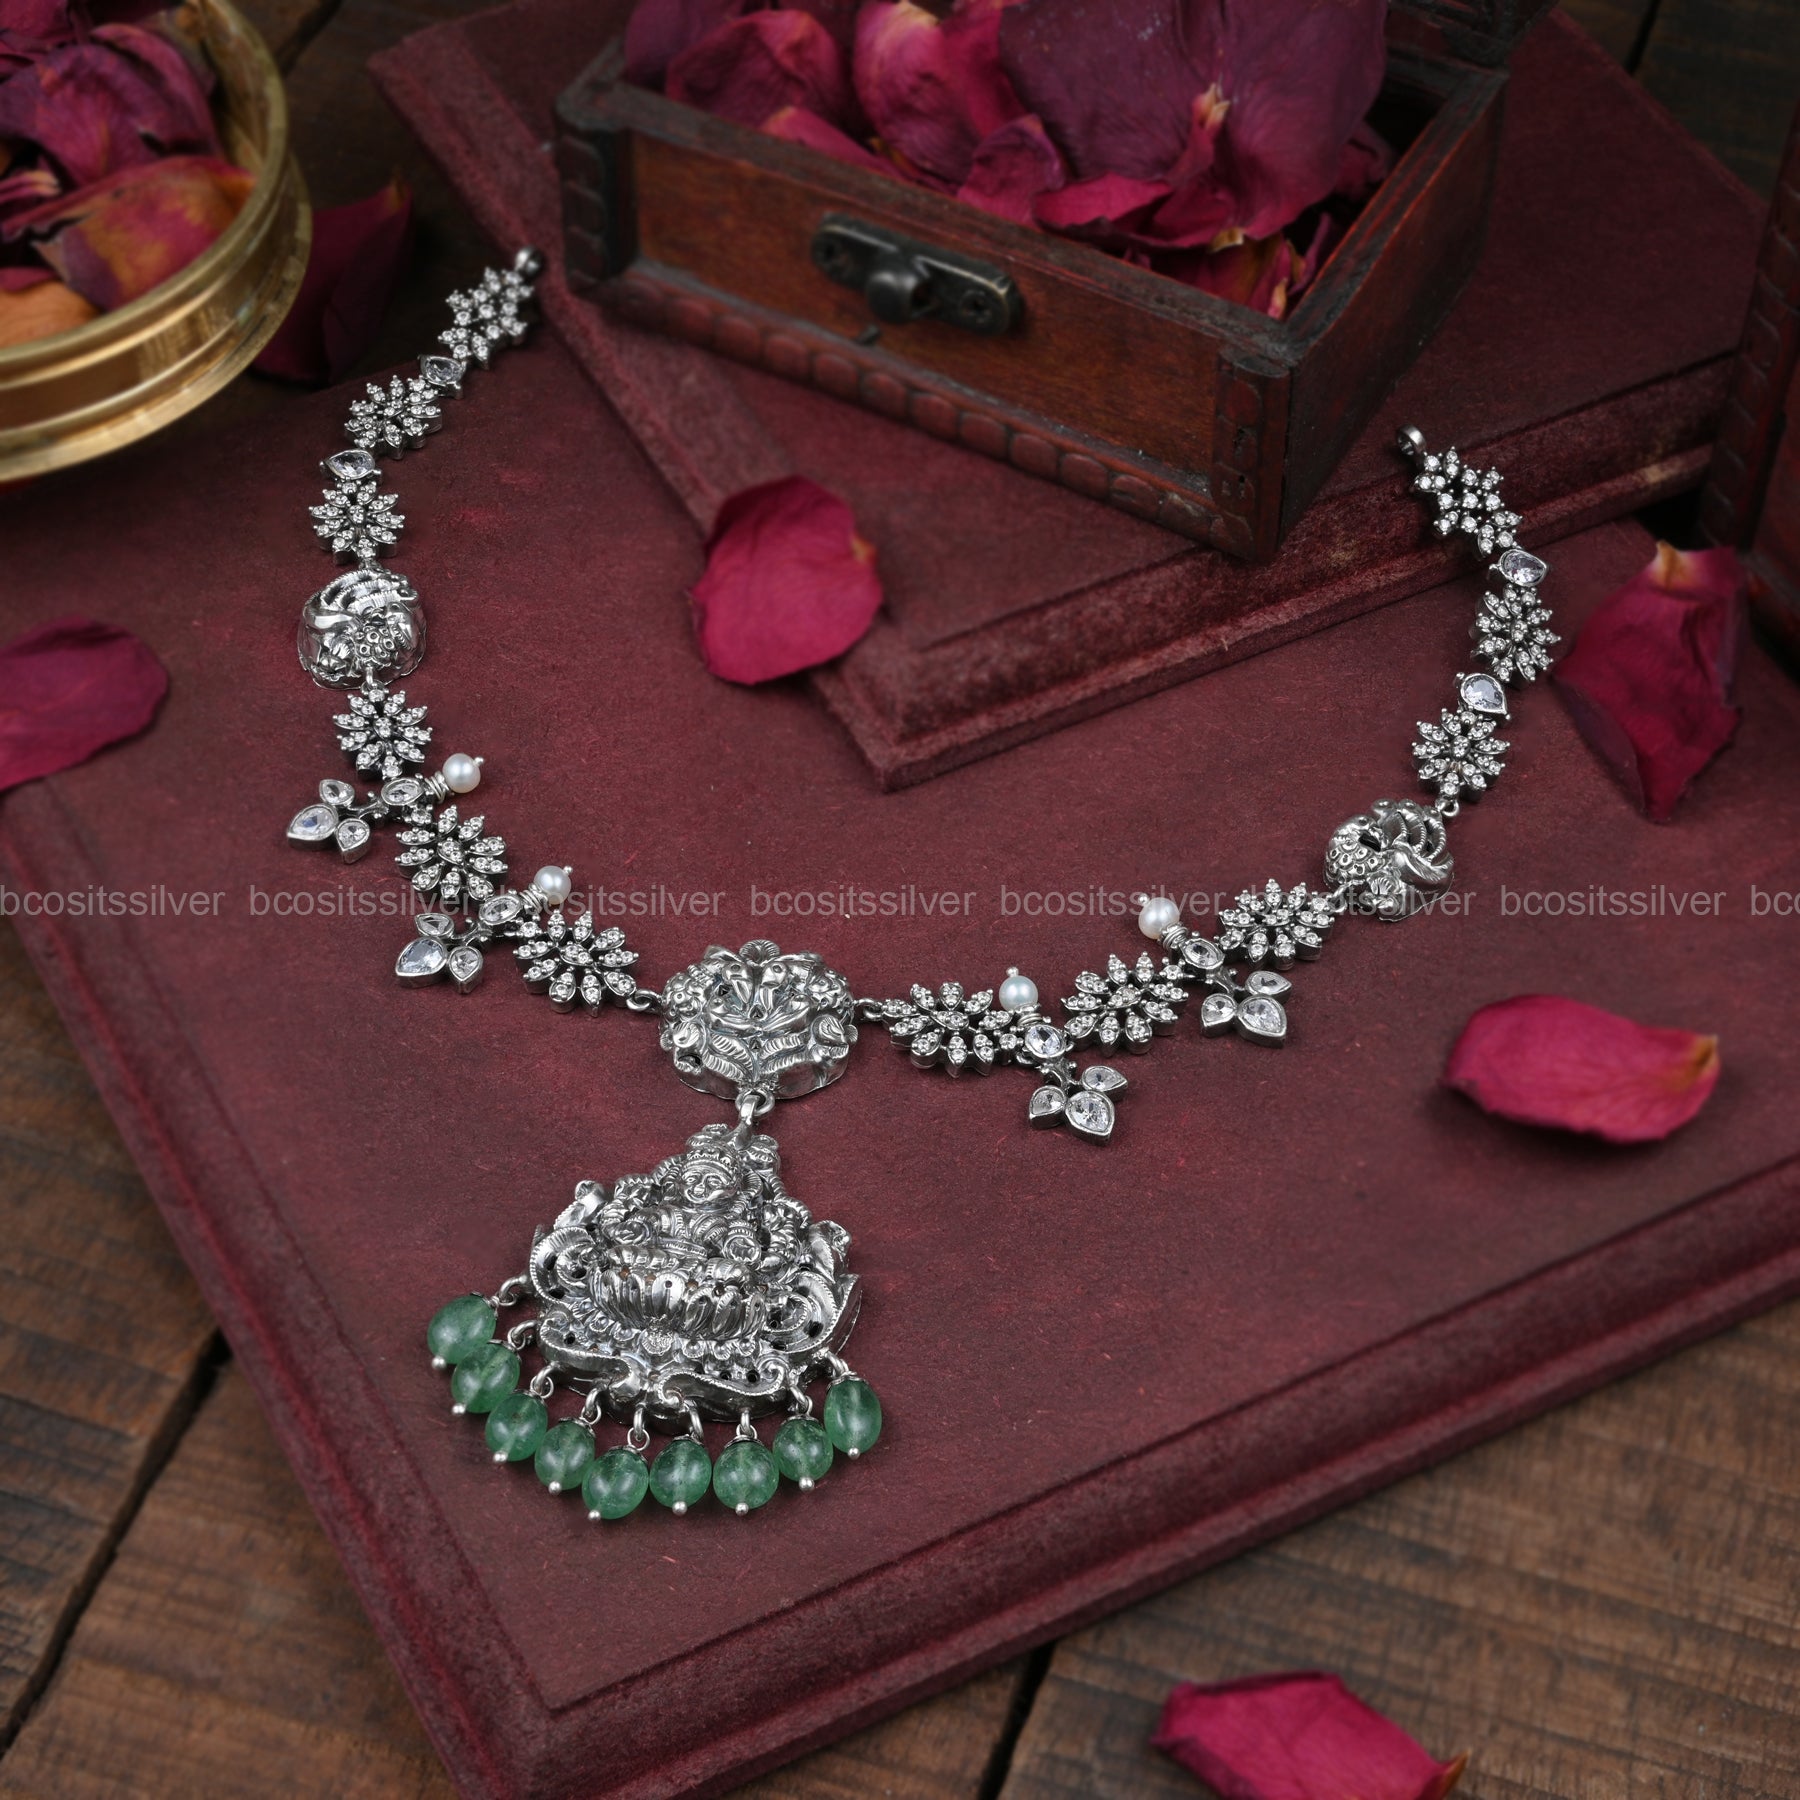 Oxidized Silver Necklace - 5050